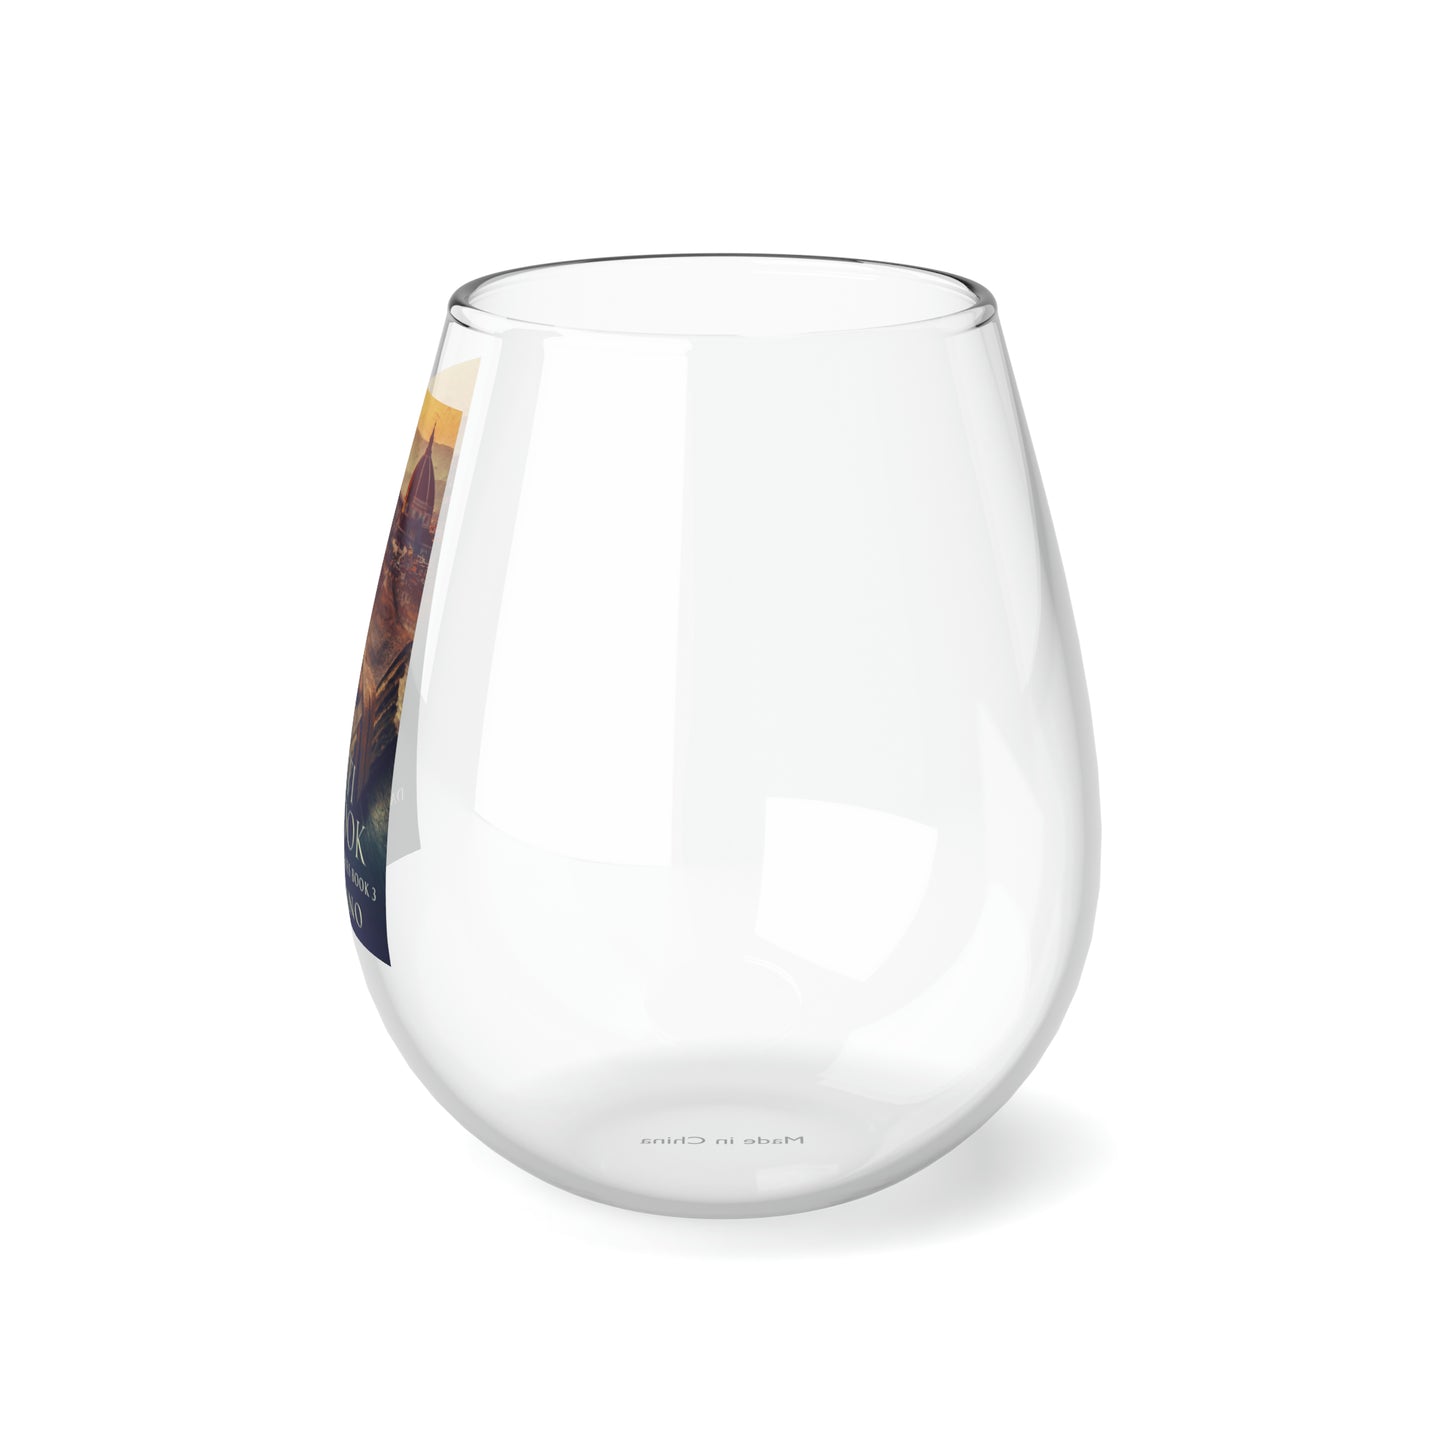 The Paletti Notebook - Stemless Wine Glass, 11.75oz